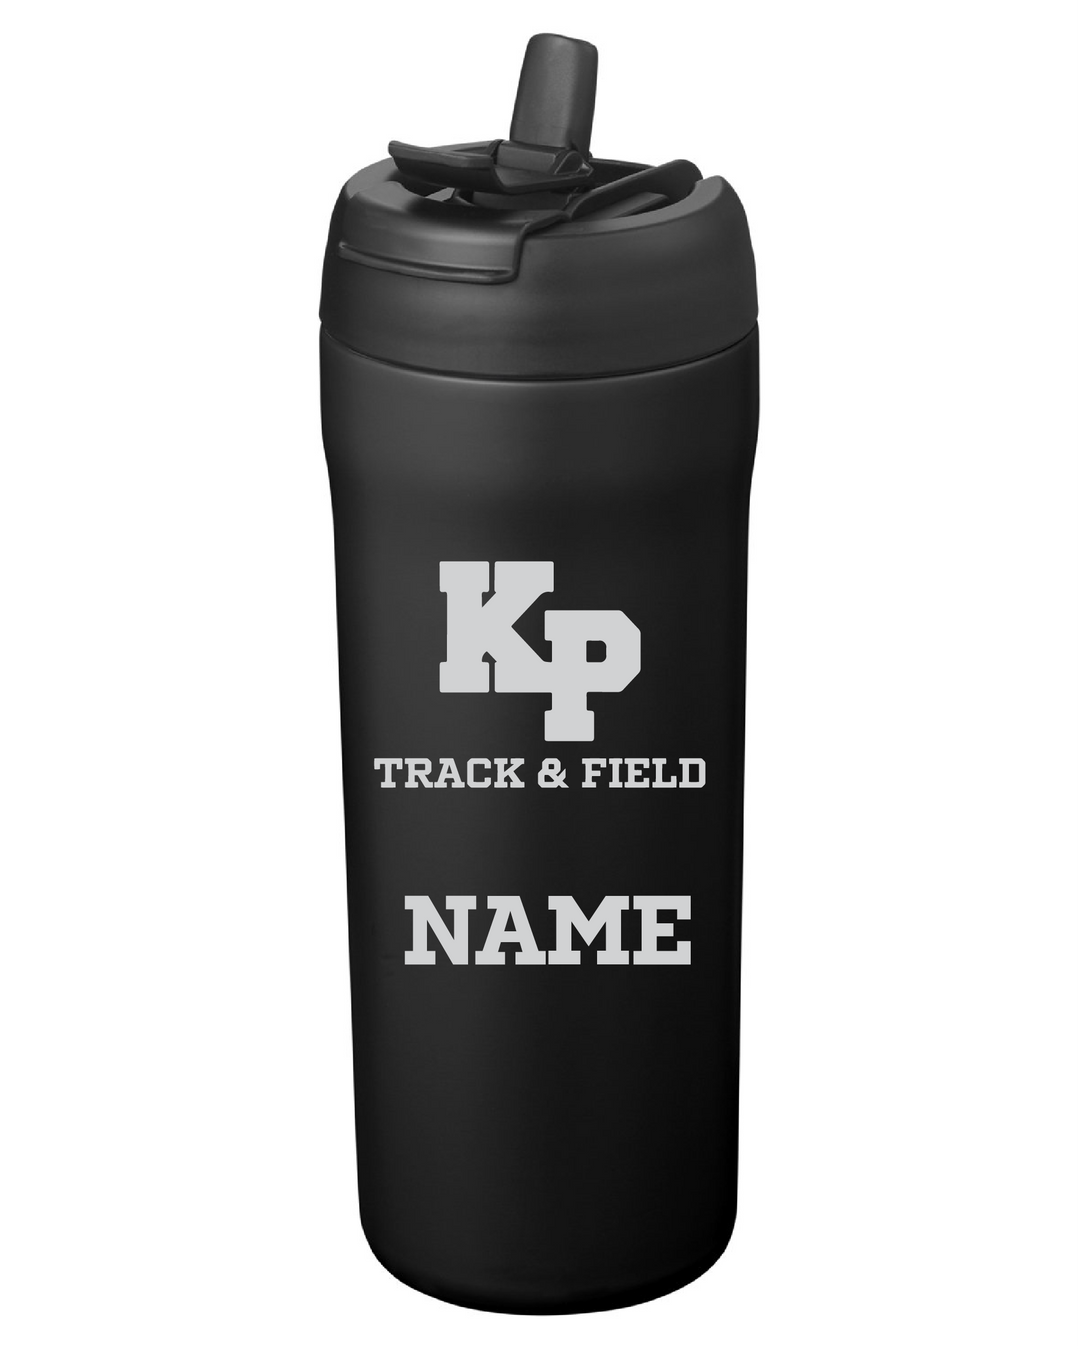 King Philip Track & Field - 24oz Duet Tumbler (MG951)